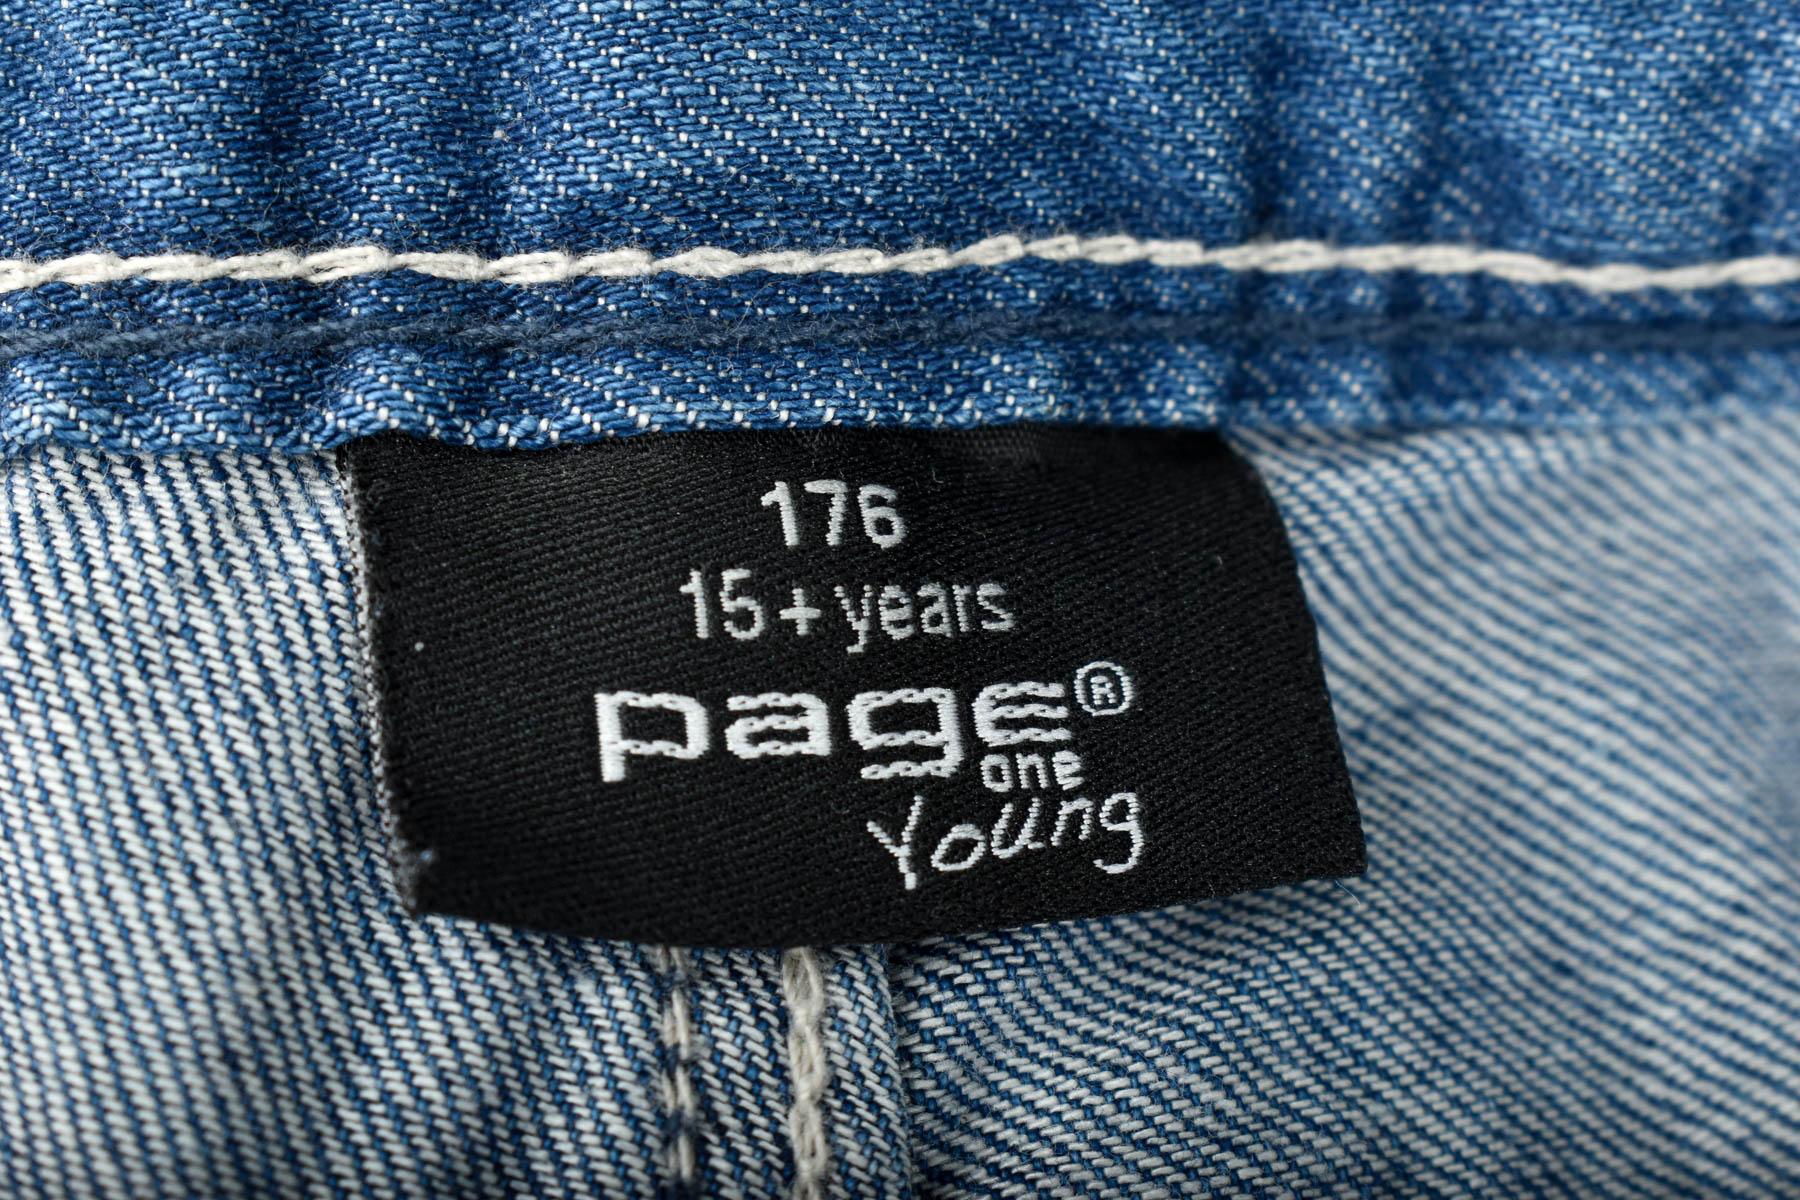 Къси панталони за момиче - Page One Young - 2